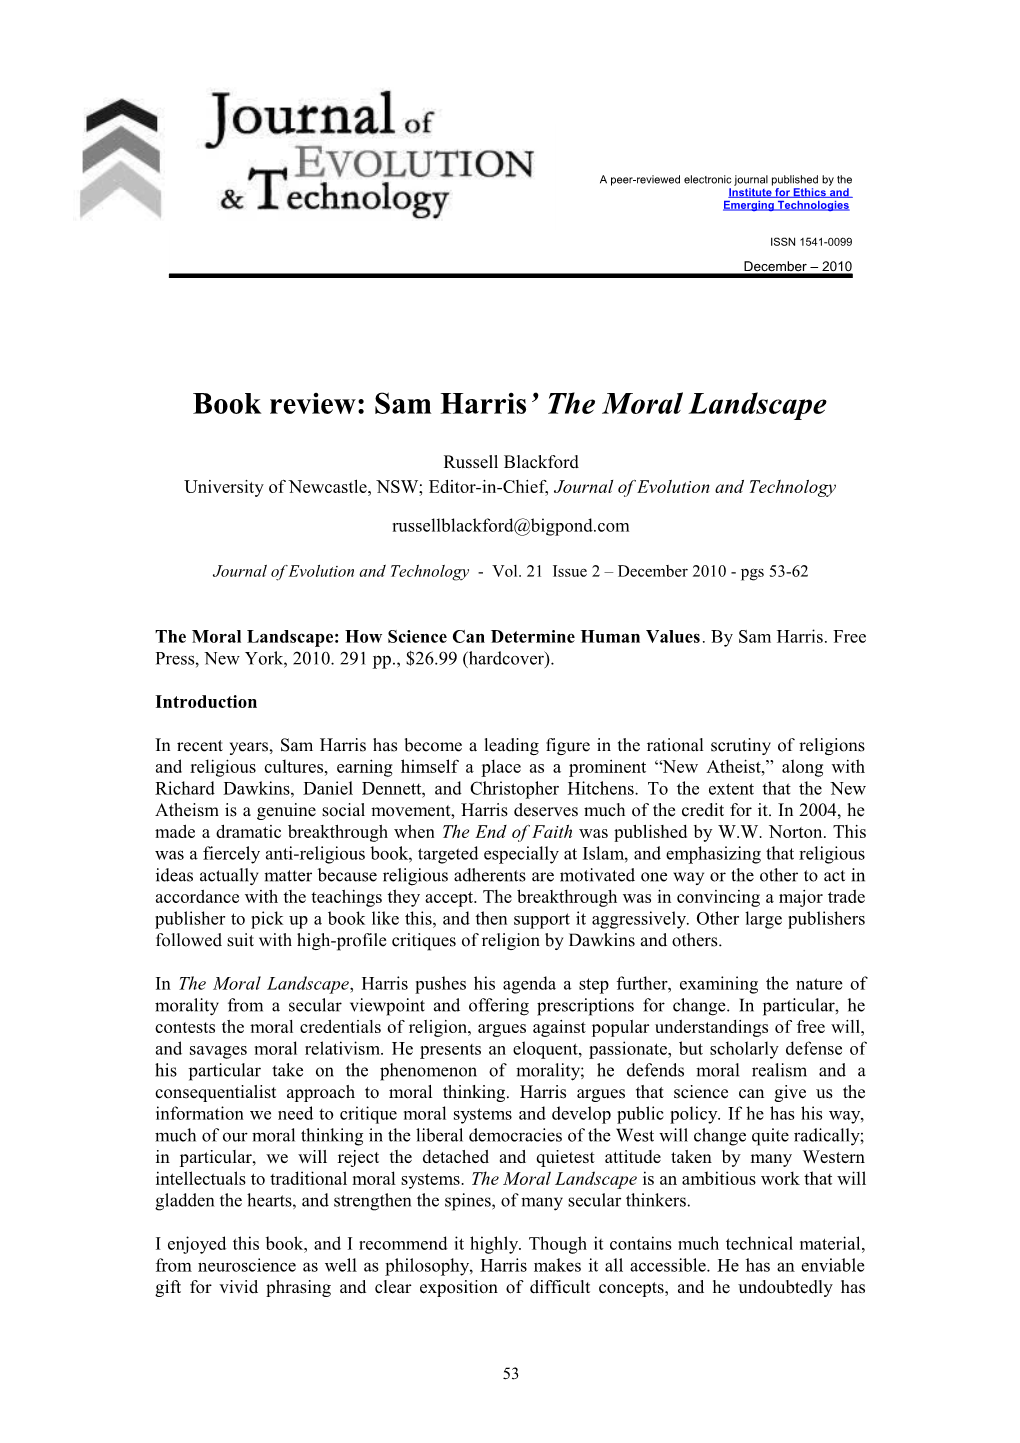 Book Review: Sam Harris the Moral Landscape